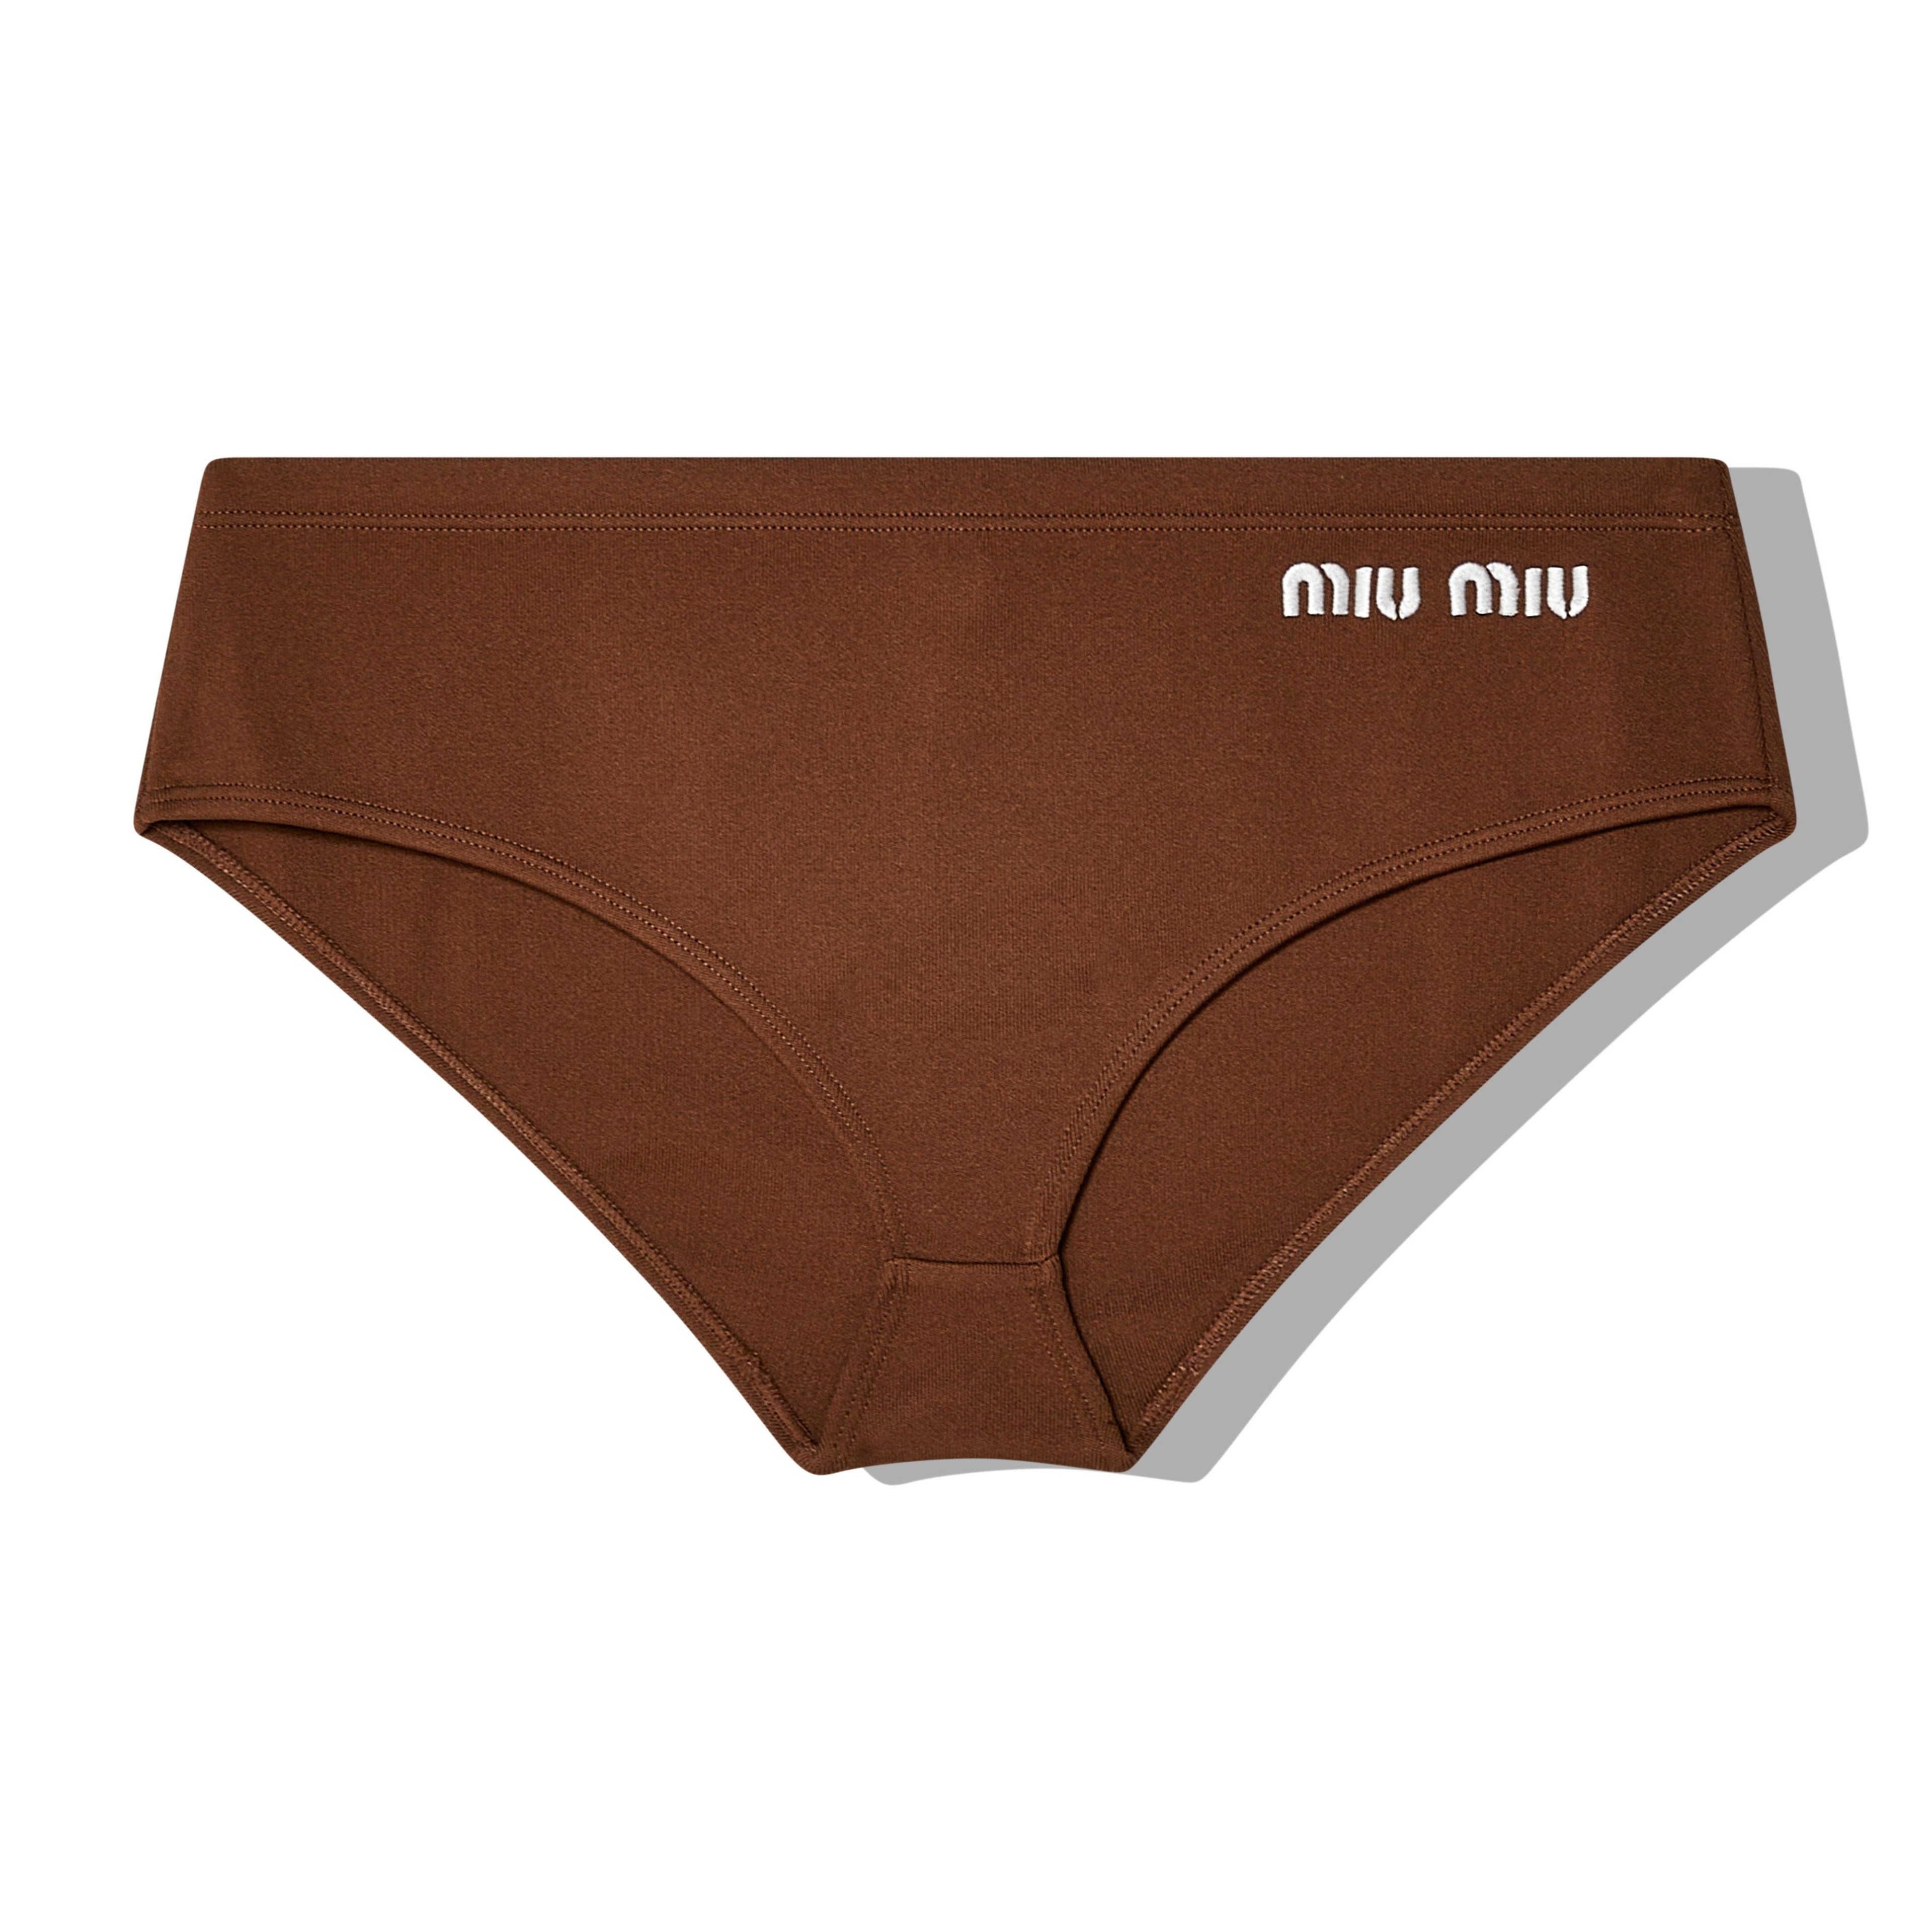 Miu Miu - Women's Swimsuit Bottoms - (Brown) by MIU MIU